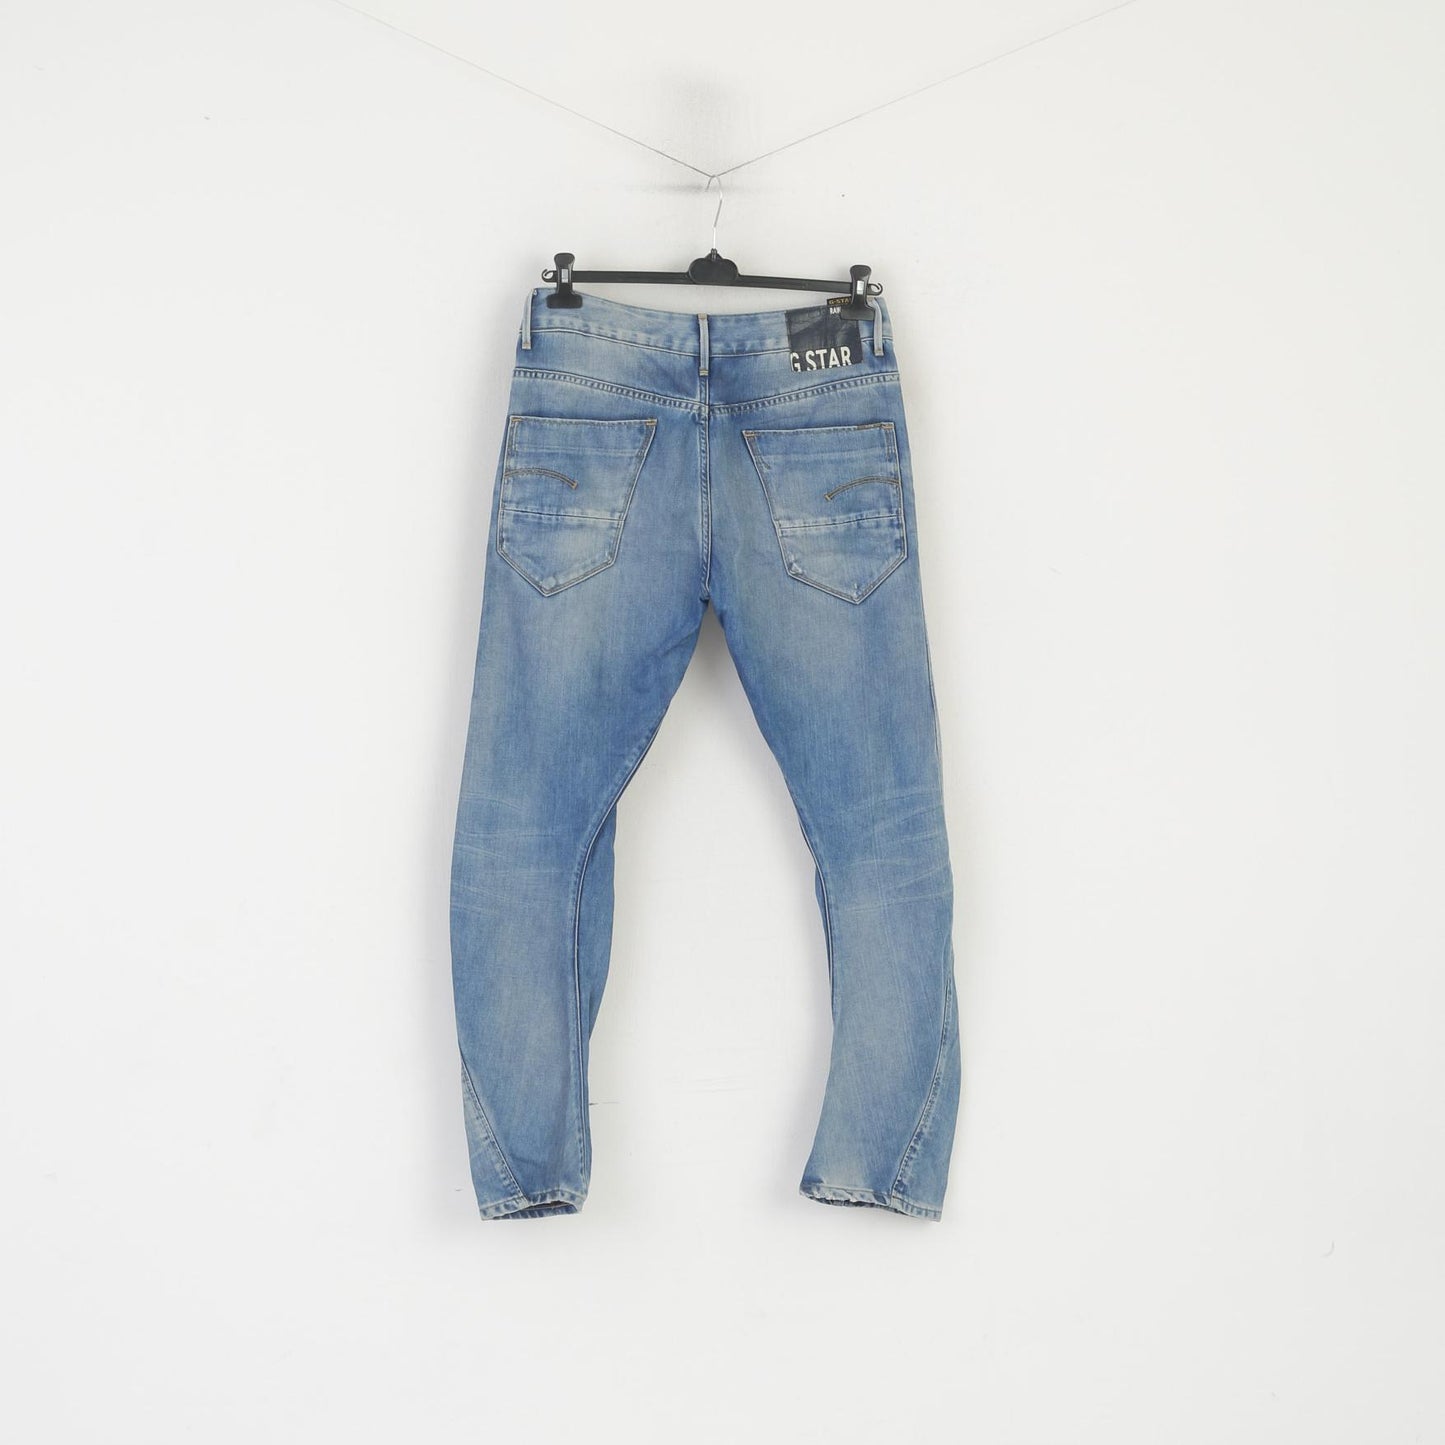 Pantaloni jeans G-Star Raw da donna 30 Pantaloni in denim affusolati larghi in cotone blu